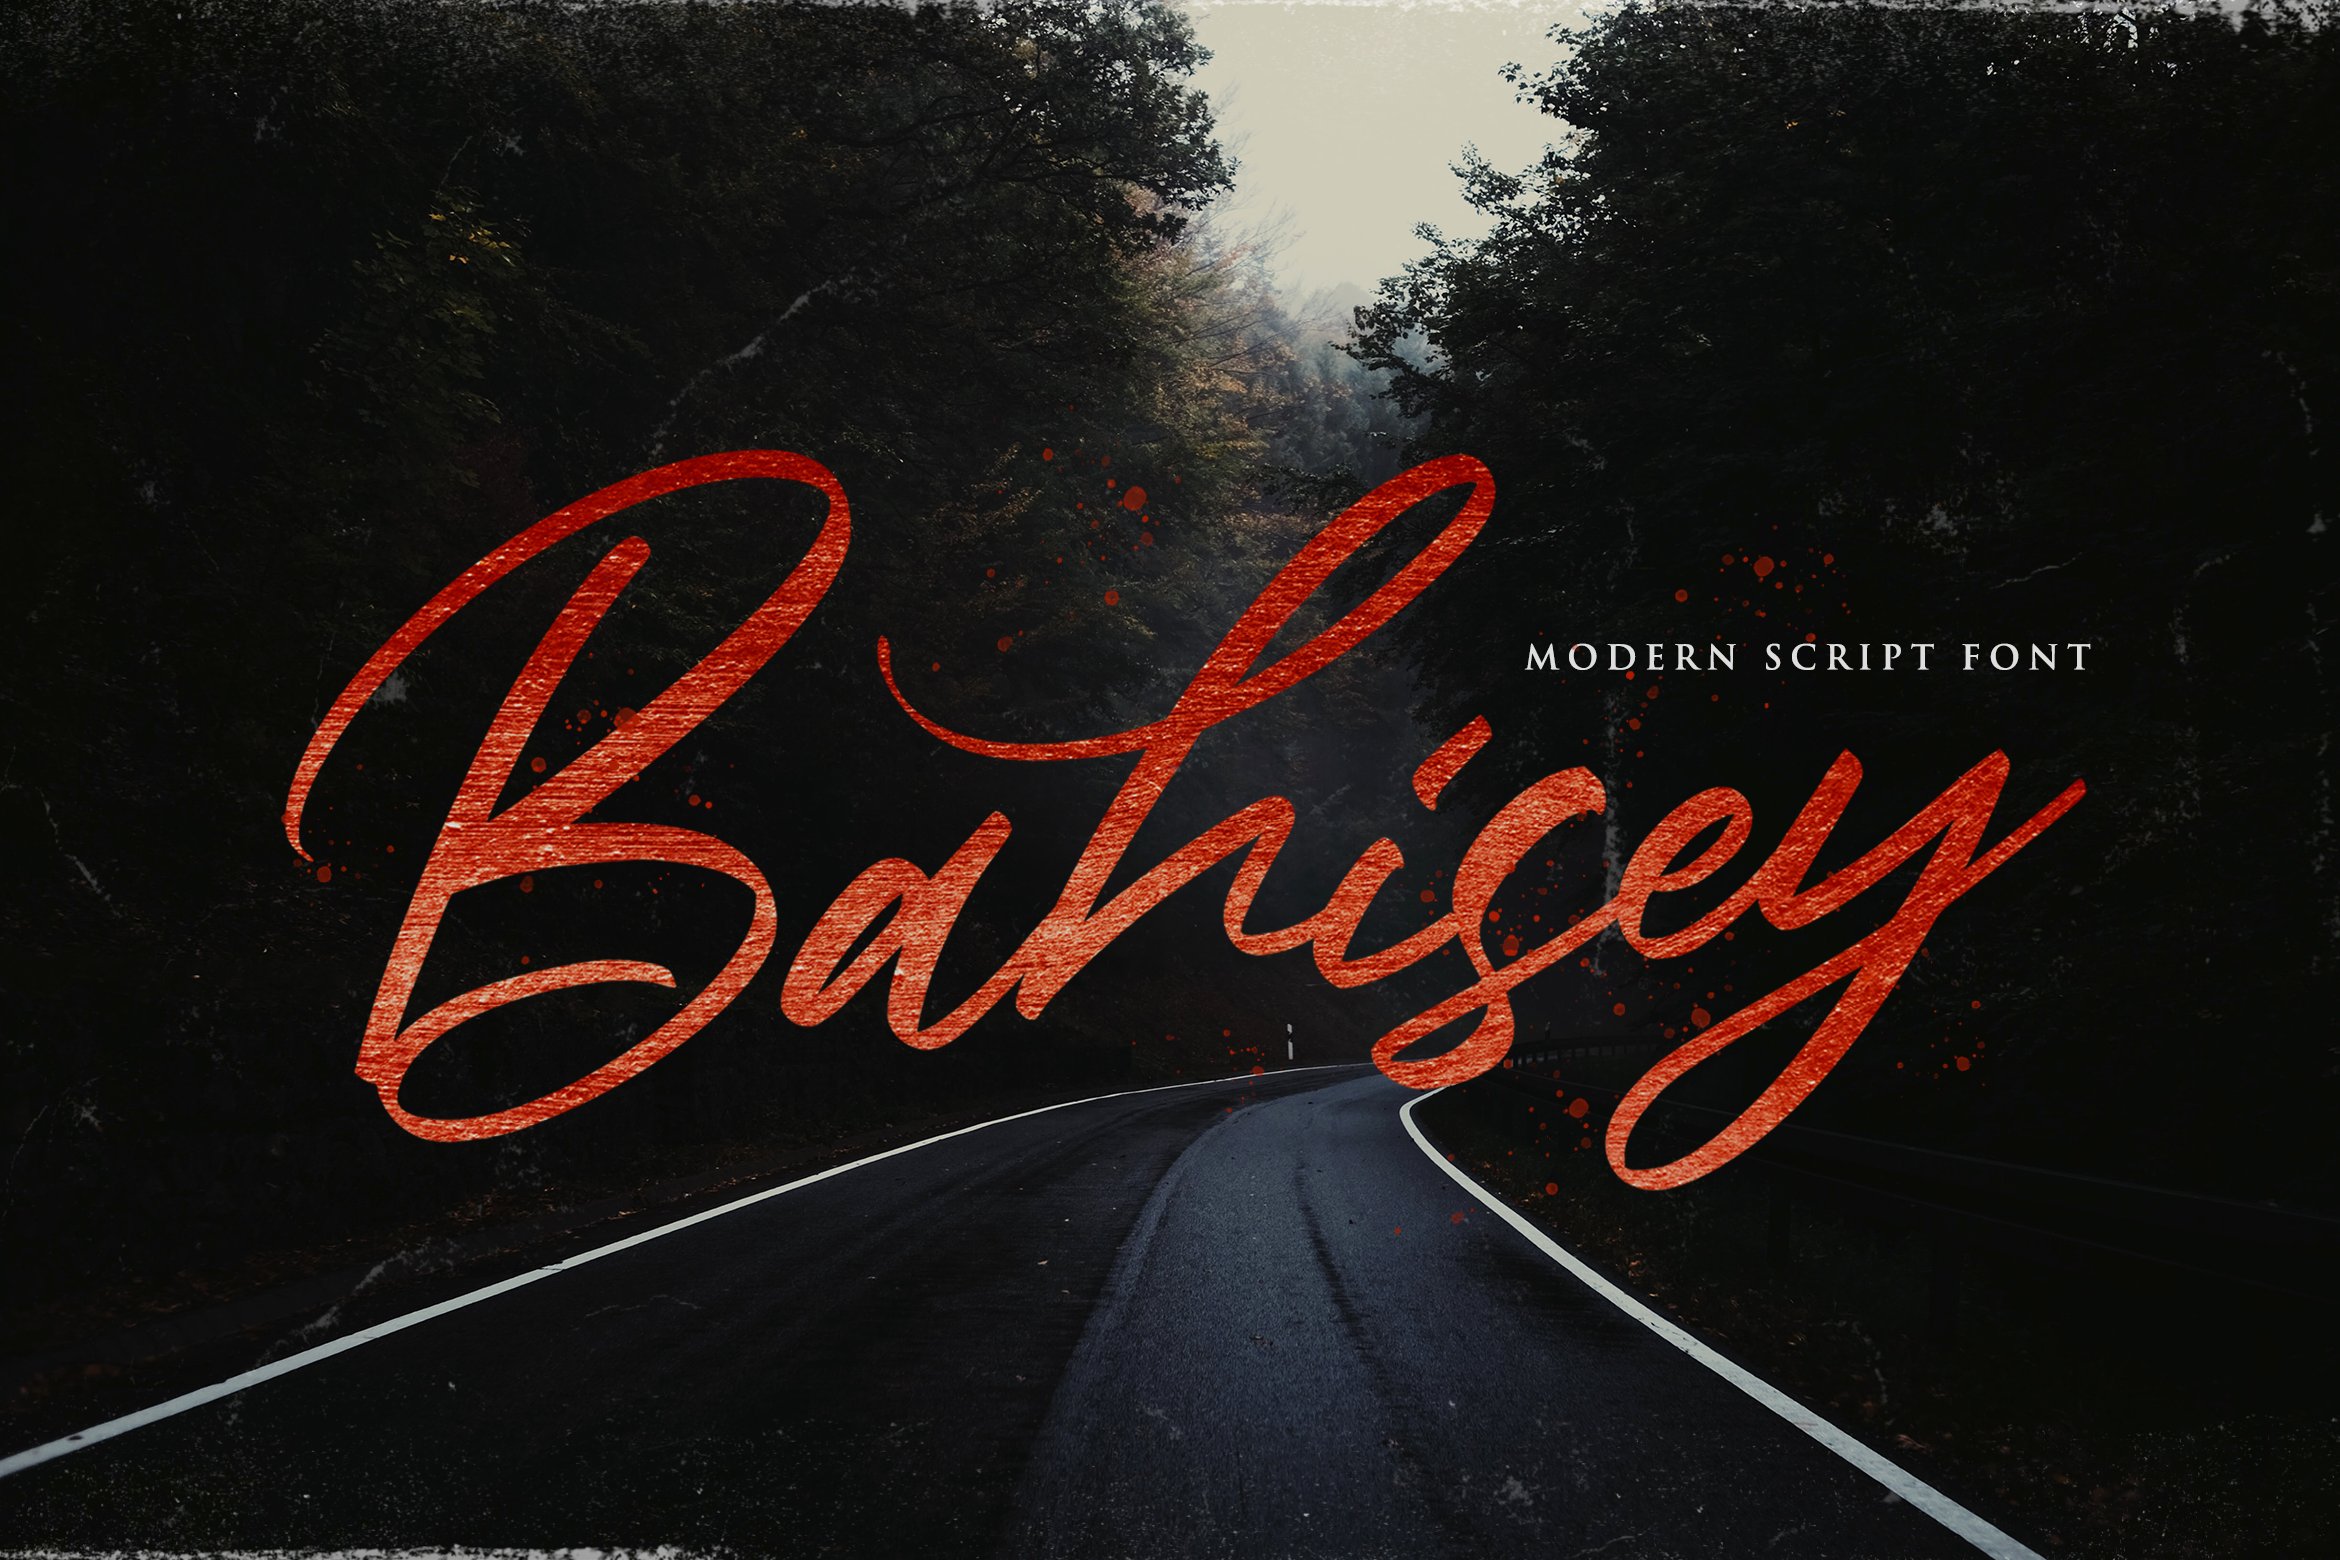 Bahisey - Modern Script Font cover image.